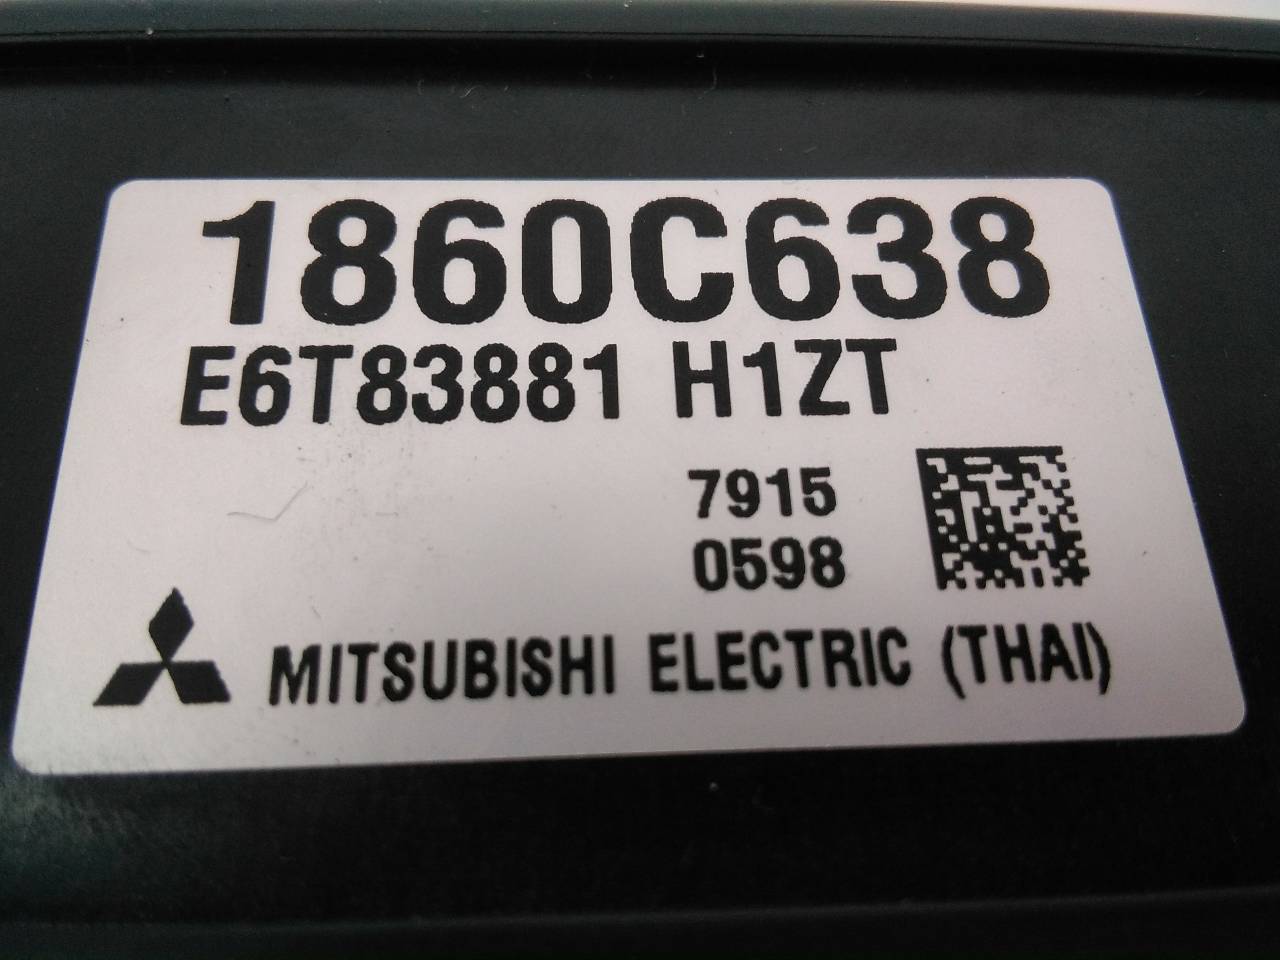 MITSUBISHI ASX 1 generation (2010-2020) Другие блоки управления 1860C638, E6T83881, E3-B3-41-4 18717553